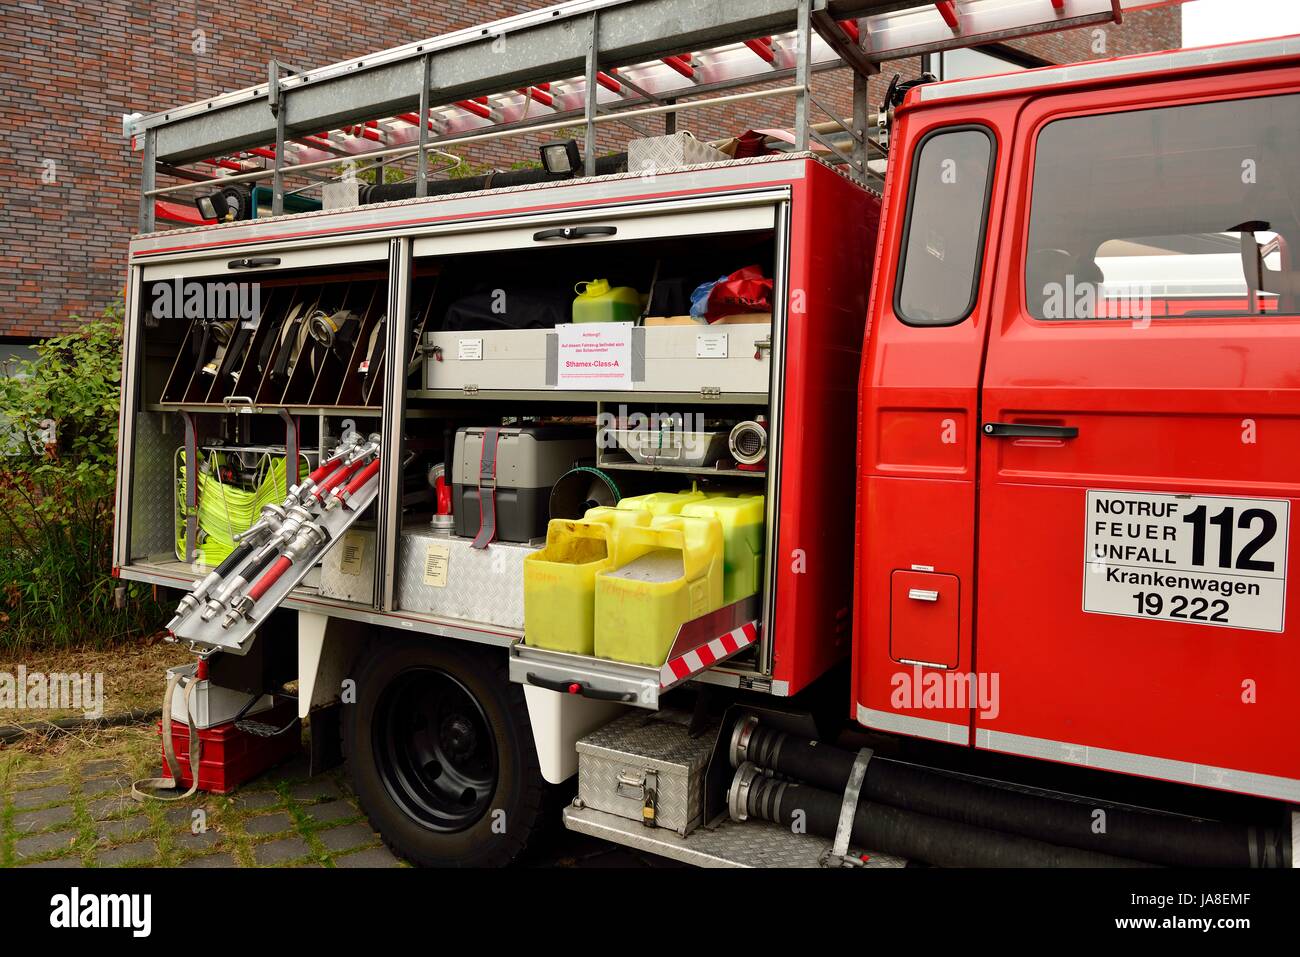 Feuerwehr: Retten di Bergen, Schützen Foto Stock